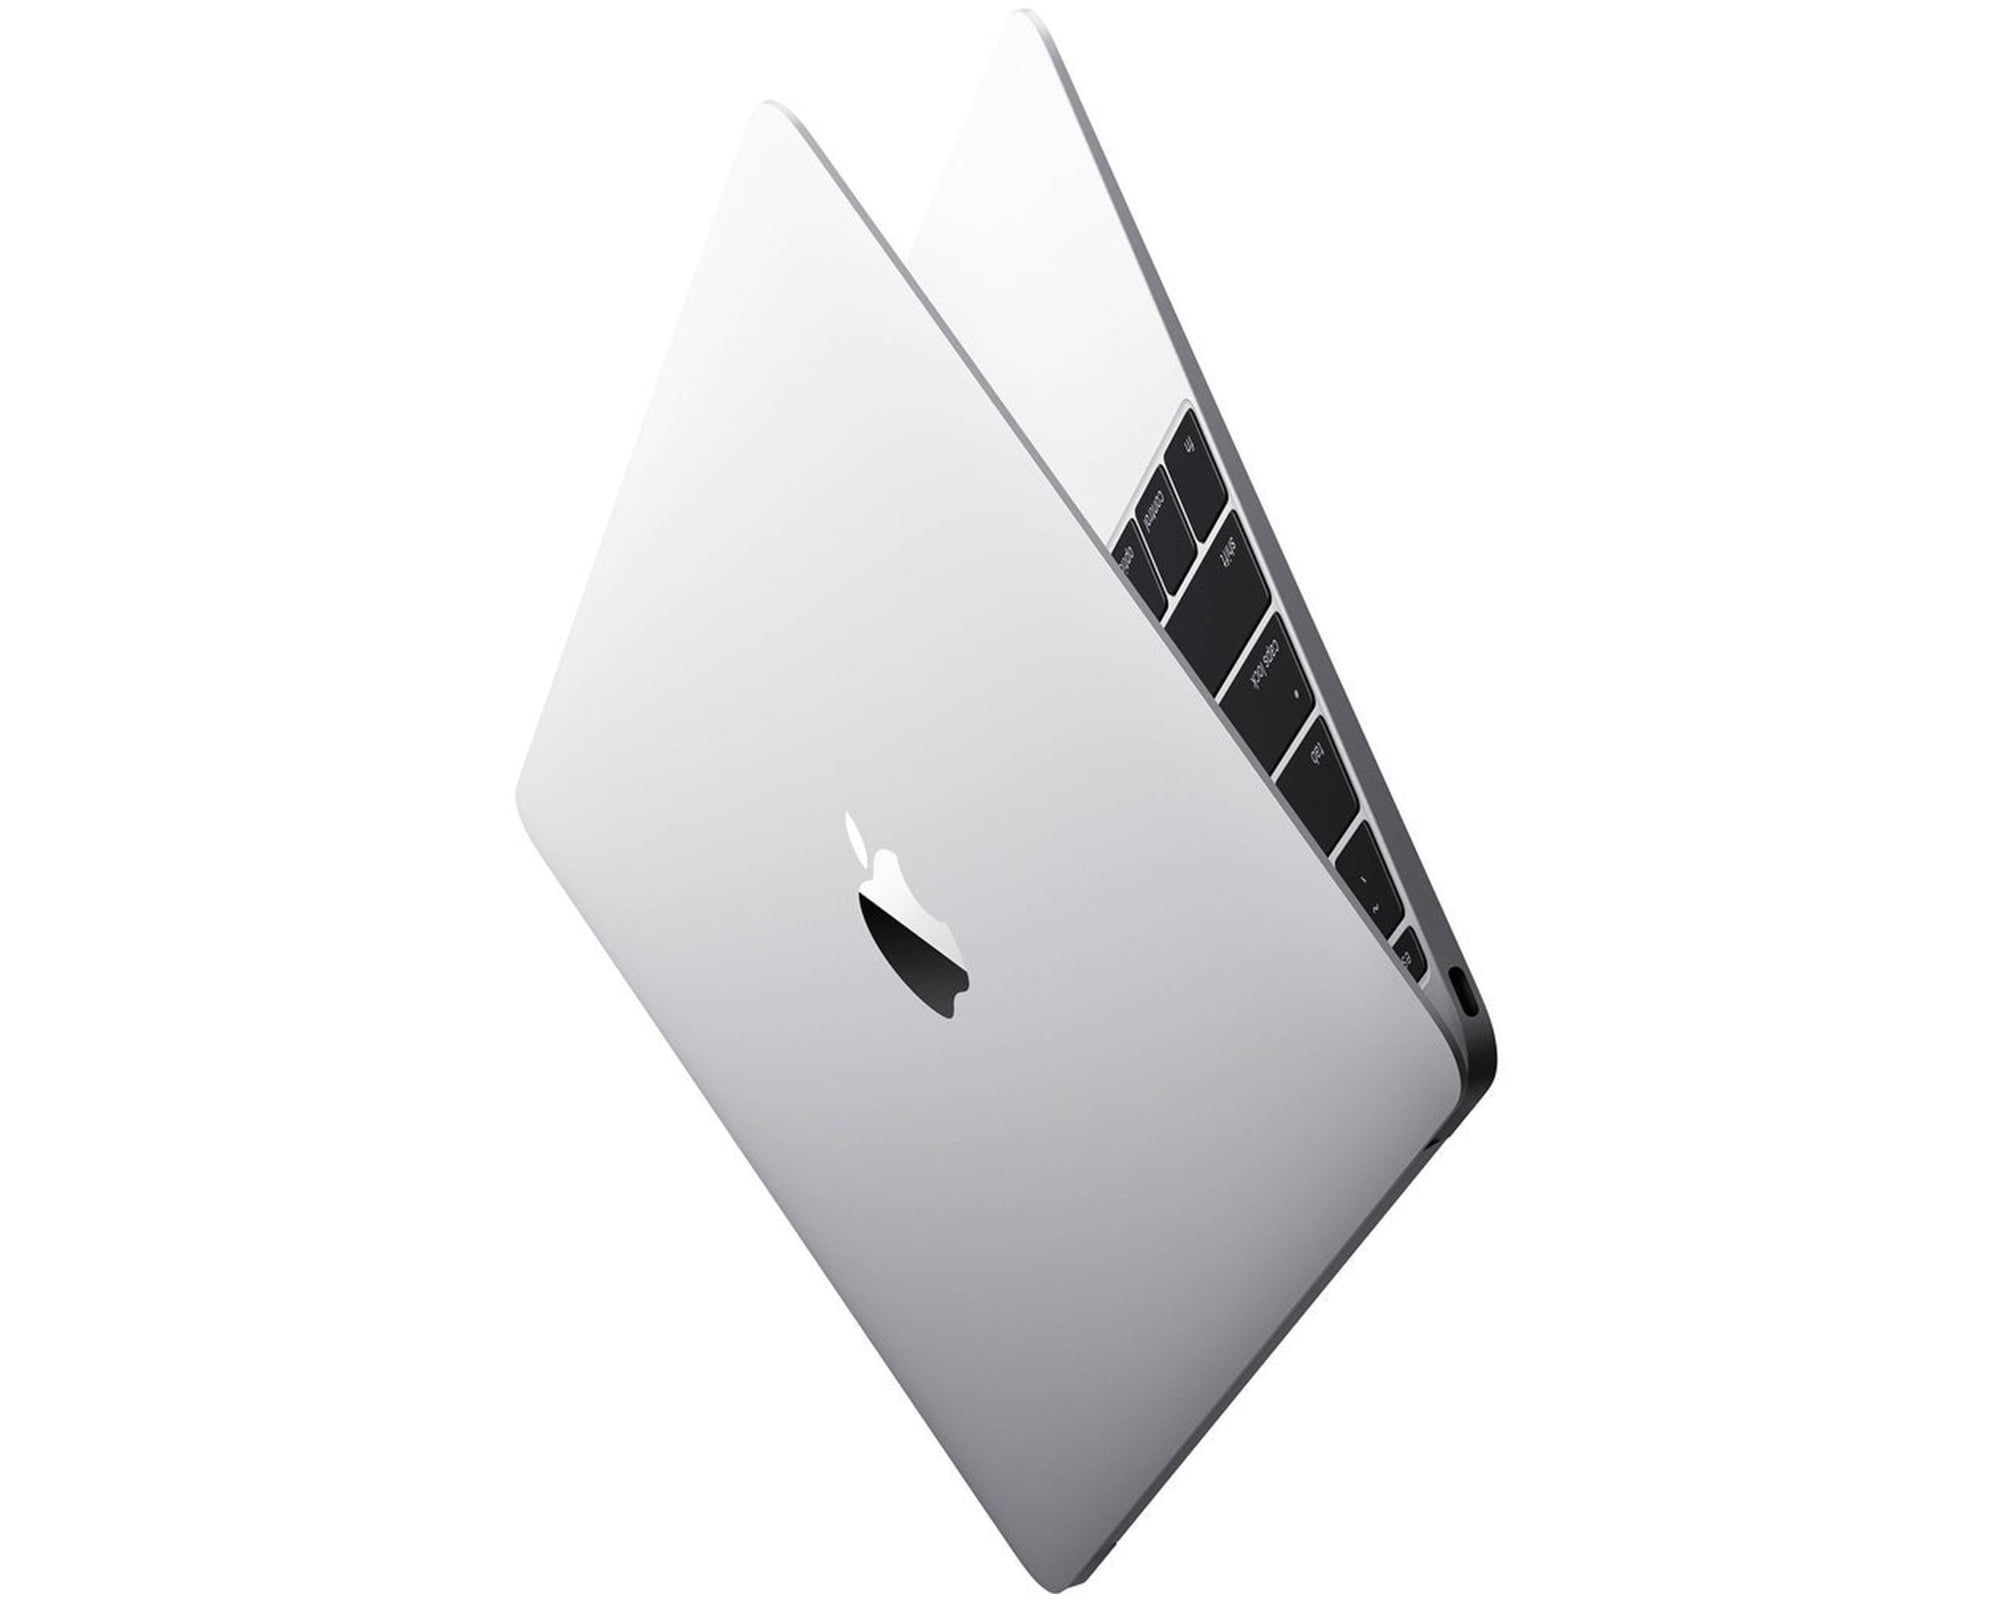 Restored Apple Macbook (MLHA2LL/A) 12-inch Retina Display Intel